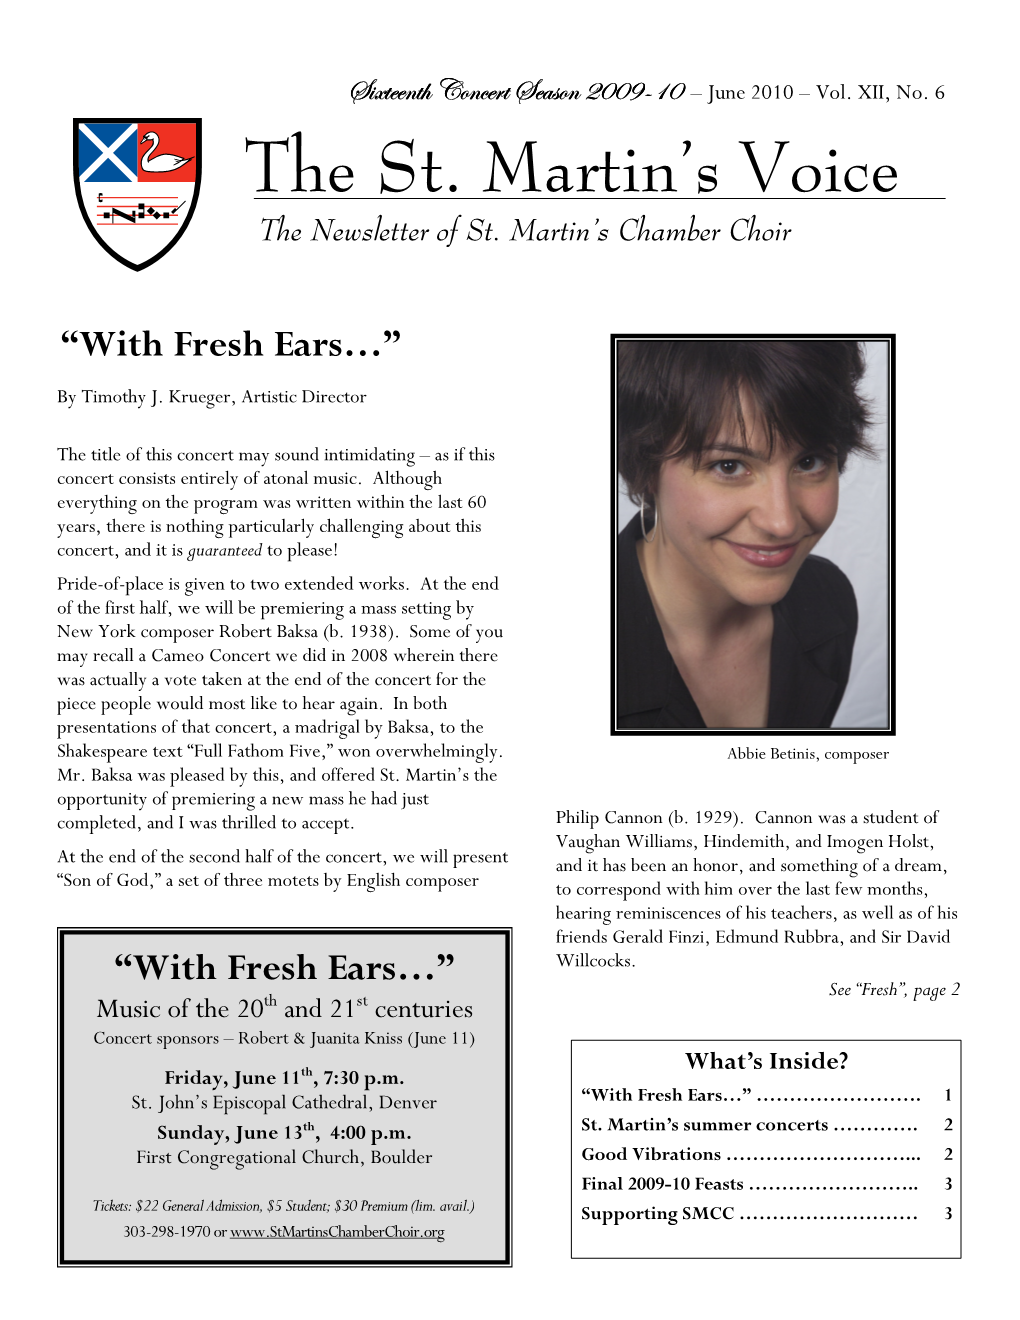 The St. Martin's Voice